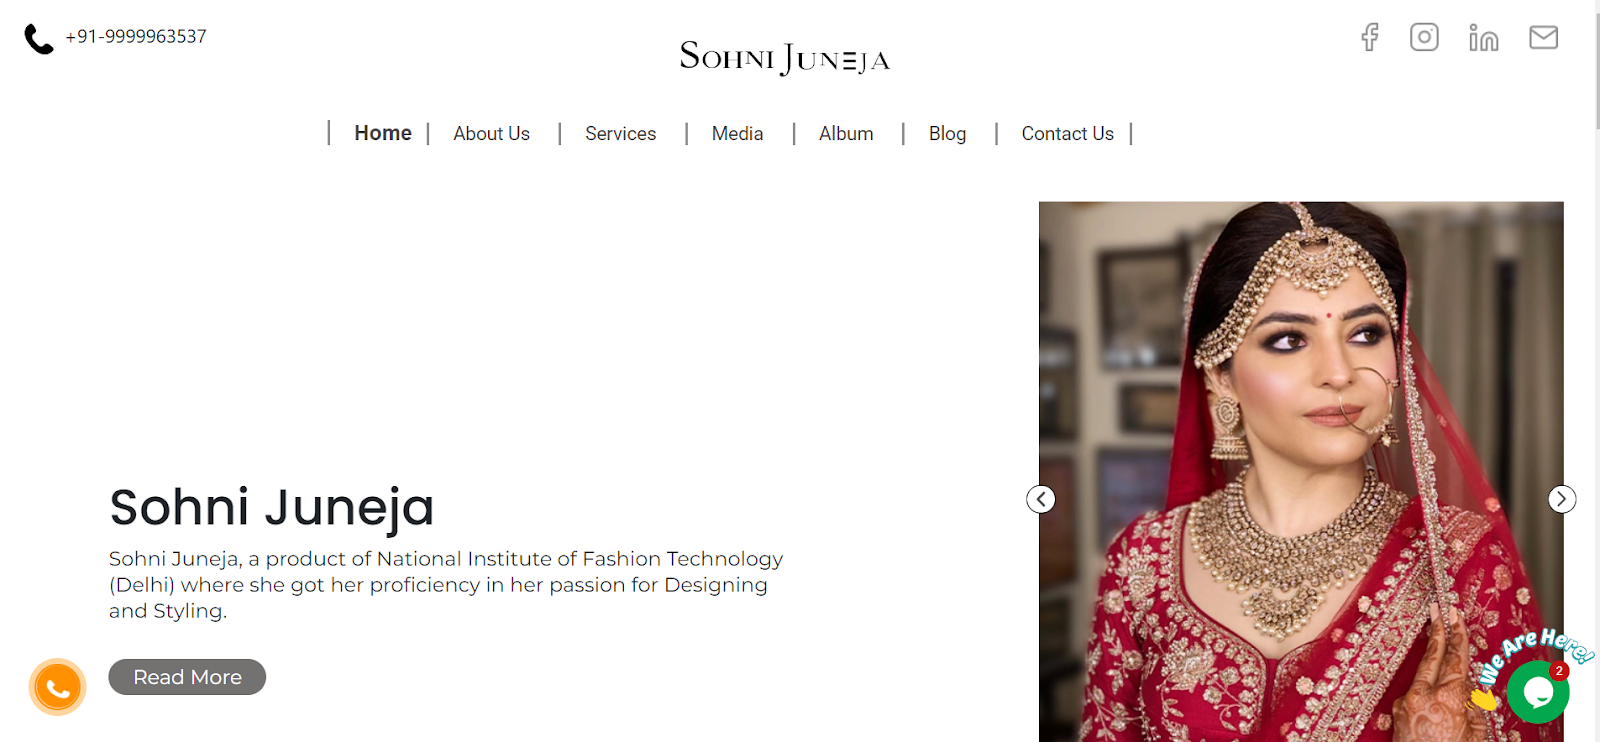 makeup artist website, Sohni Juneja